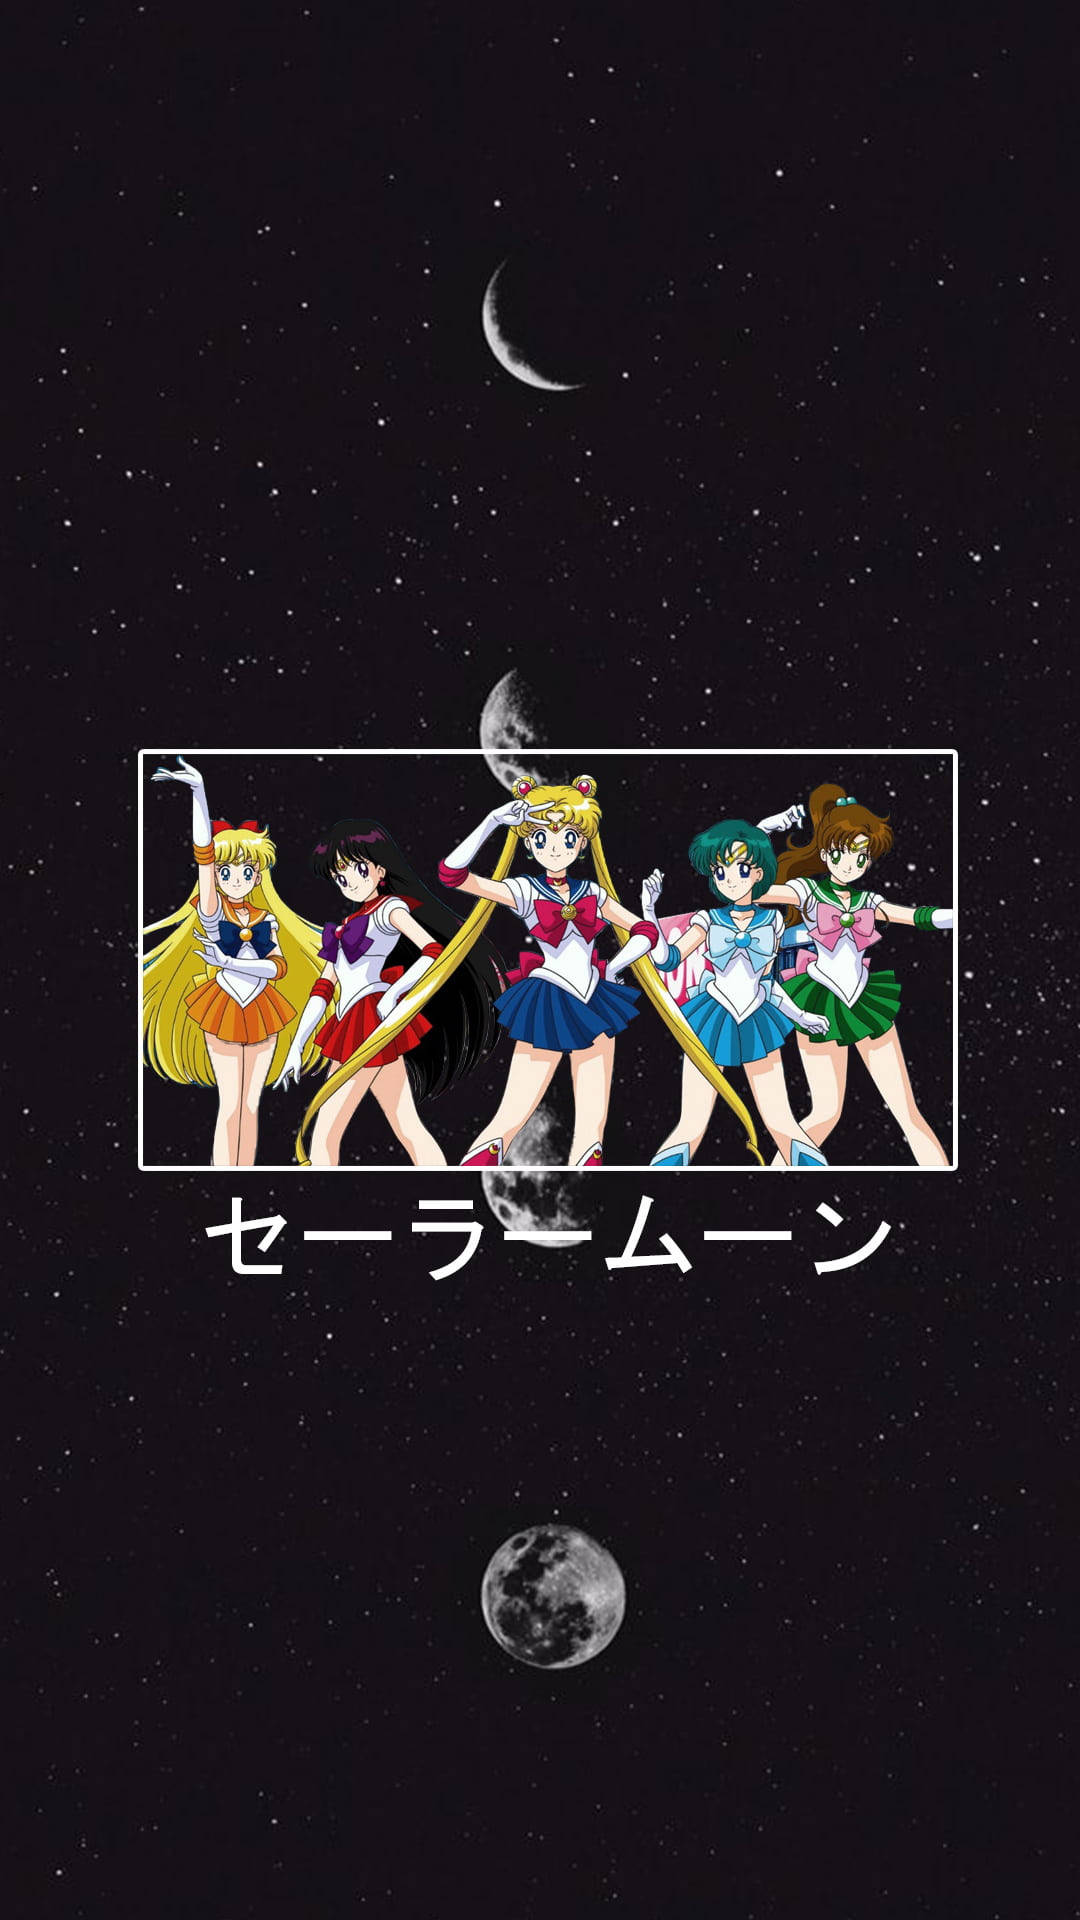 Wallpaper Sailormoon Sailor Moon Wallpaper Artistic Anime  Wallpaperforu